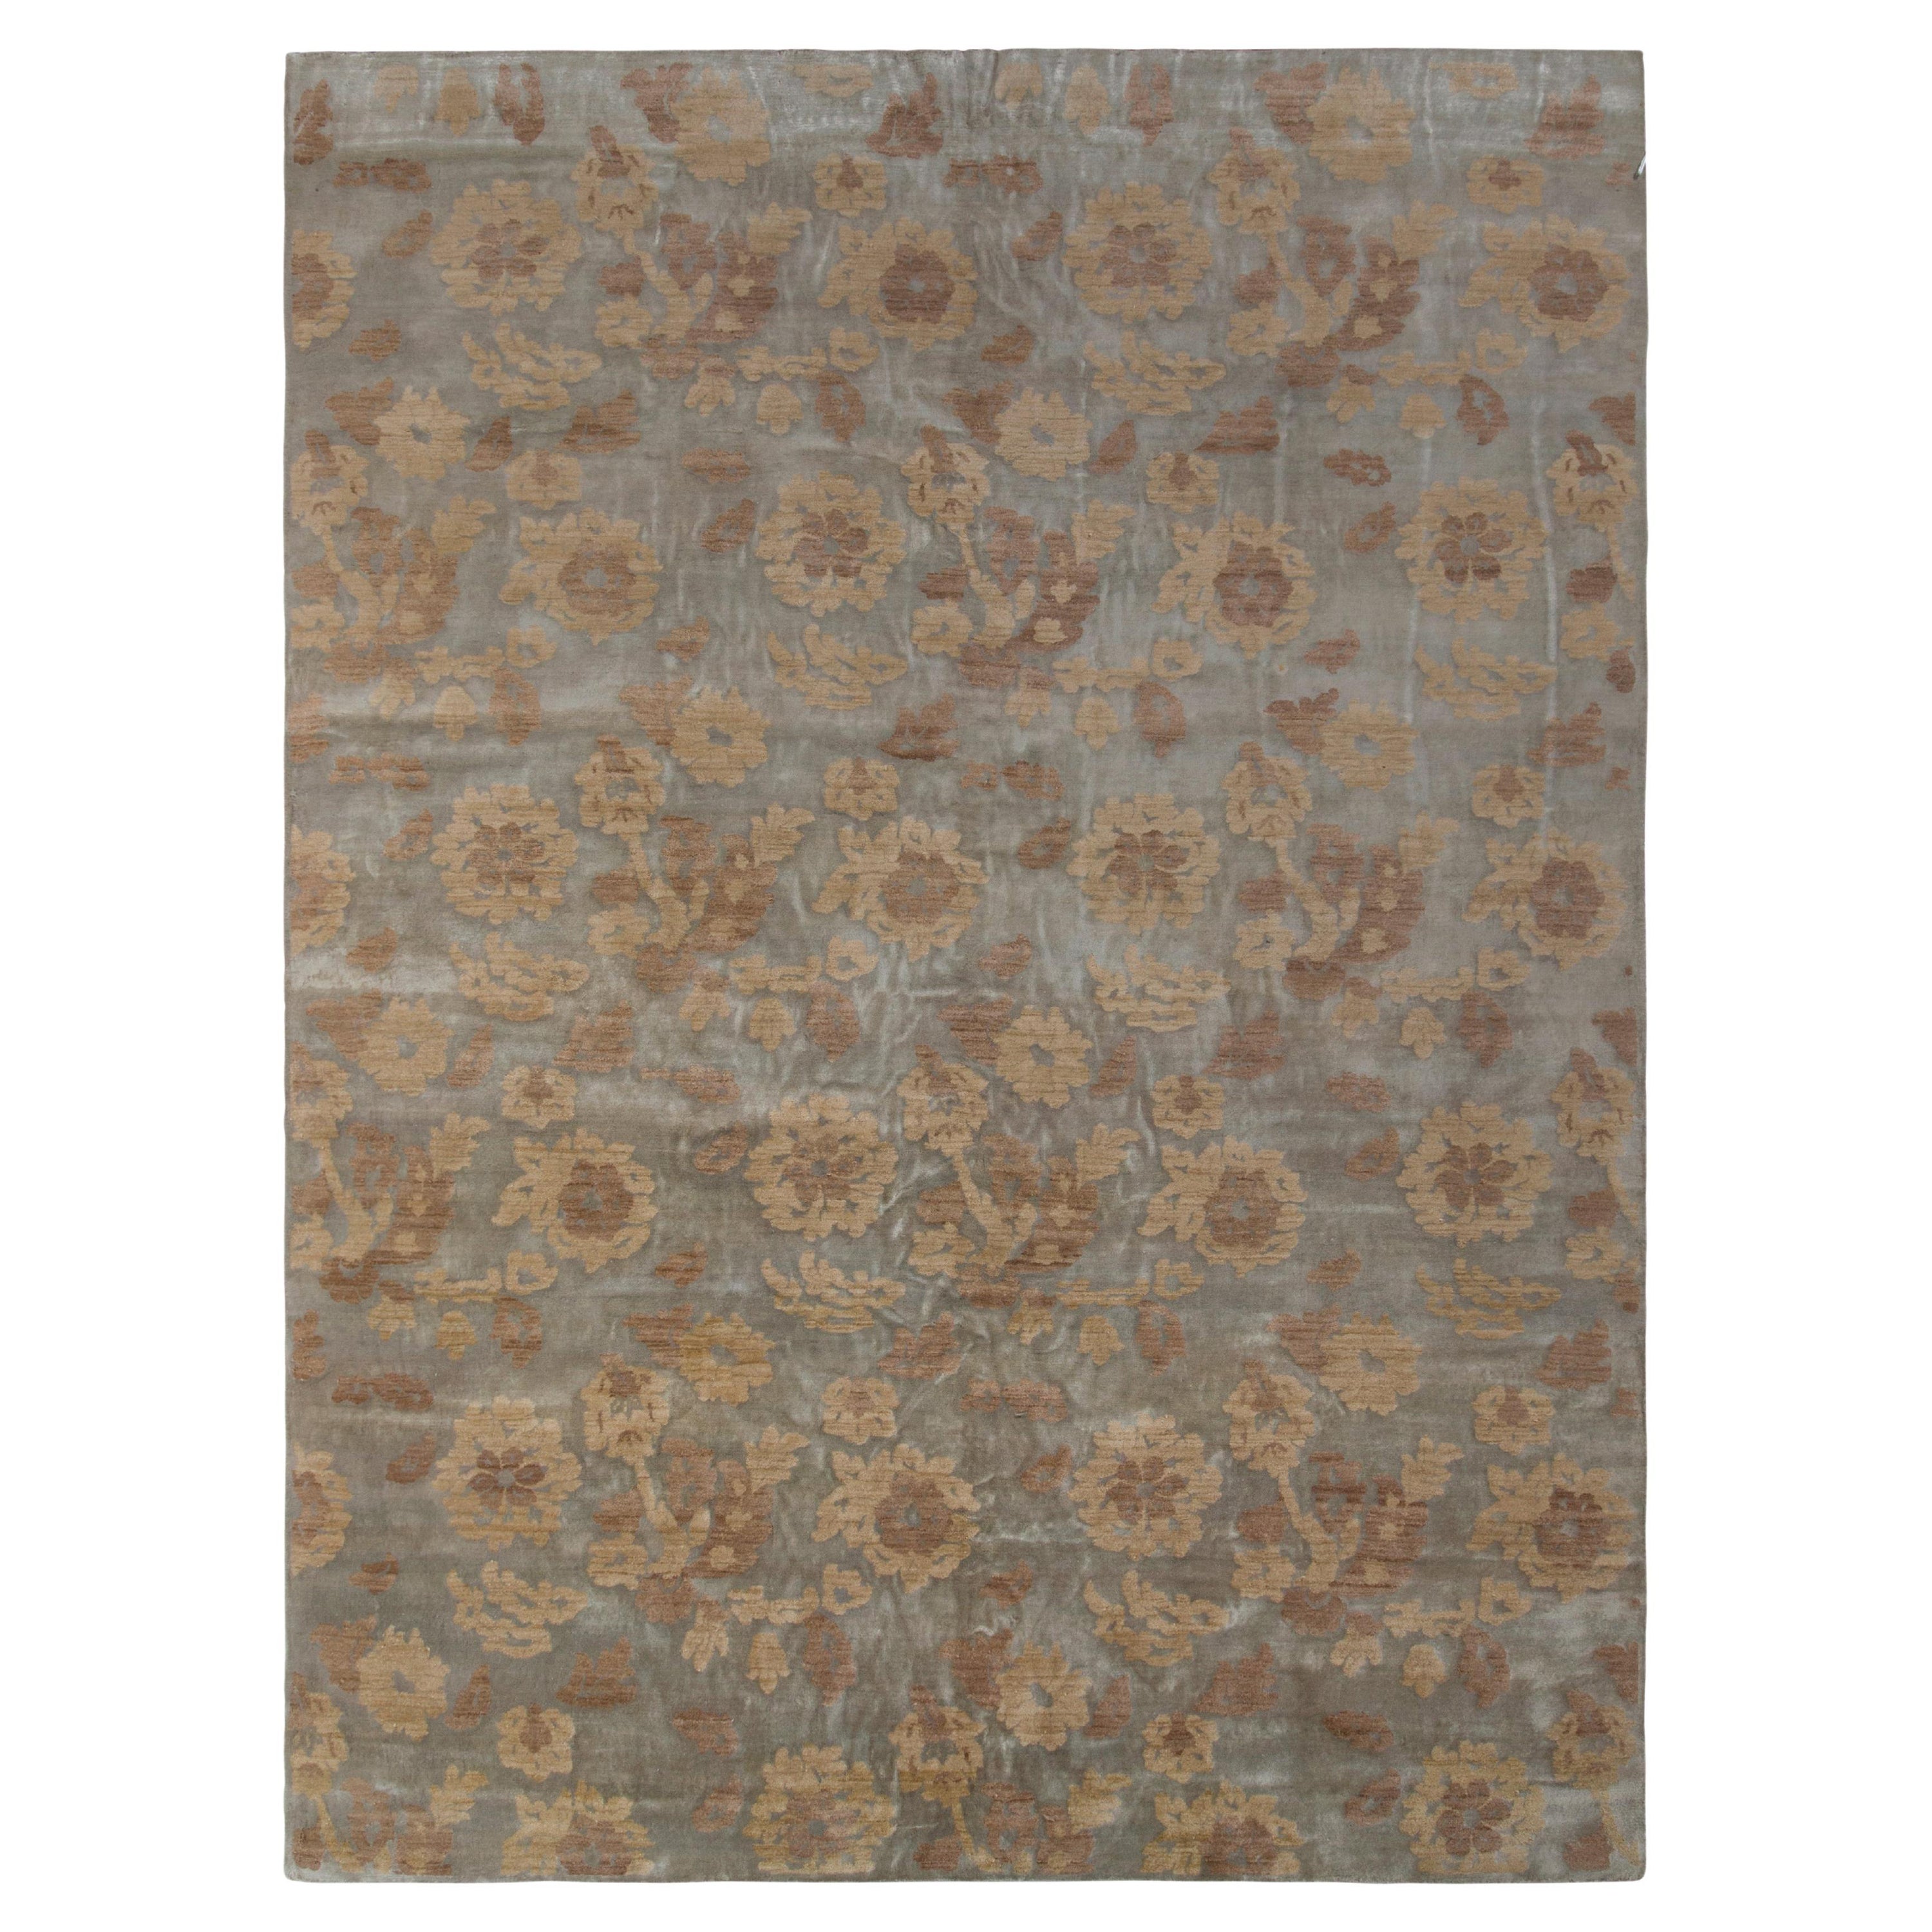 Rug & Kilim’s Handmade Contemporary Rug in Beige Brown Floral Pattern